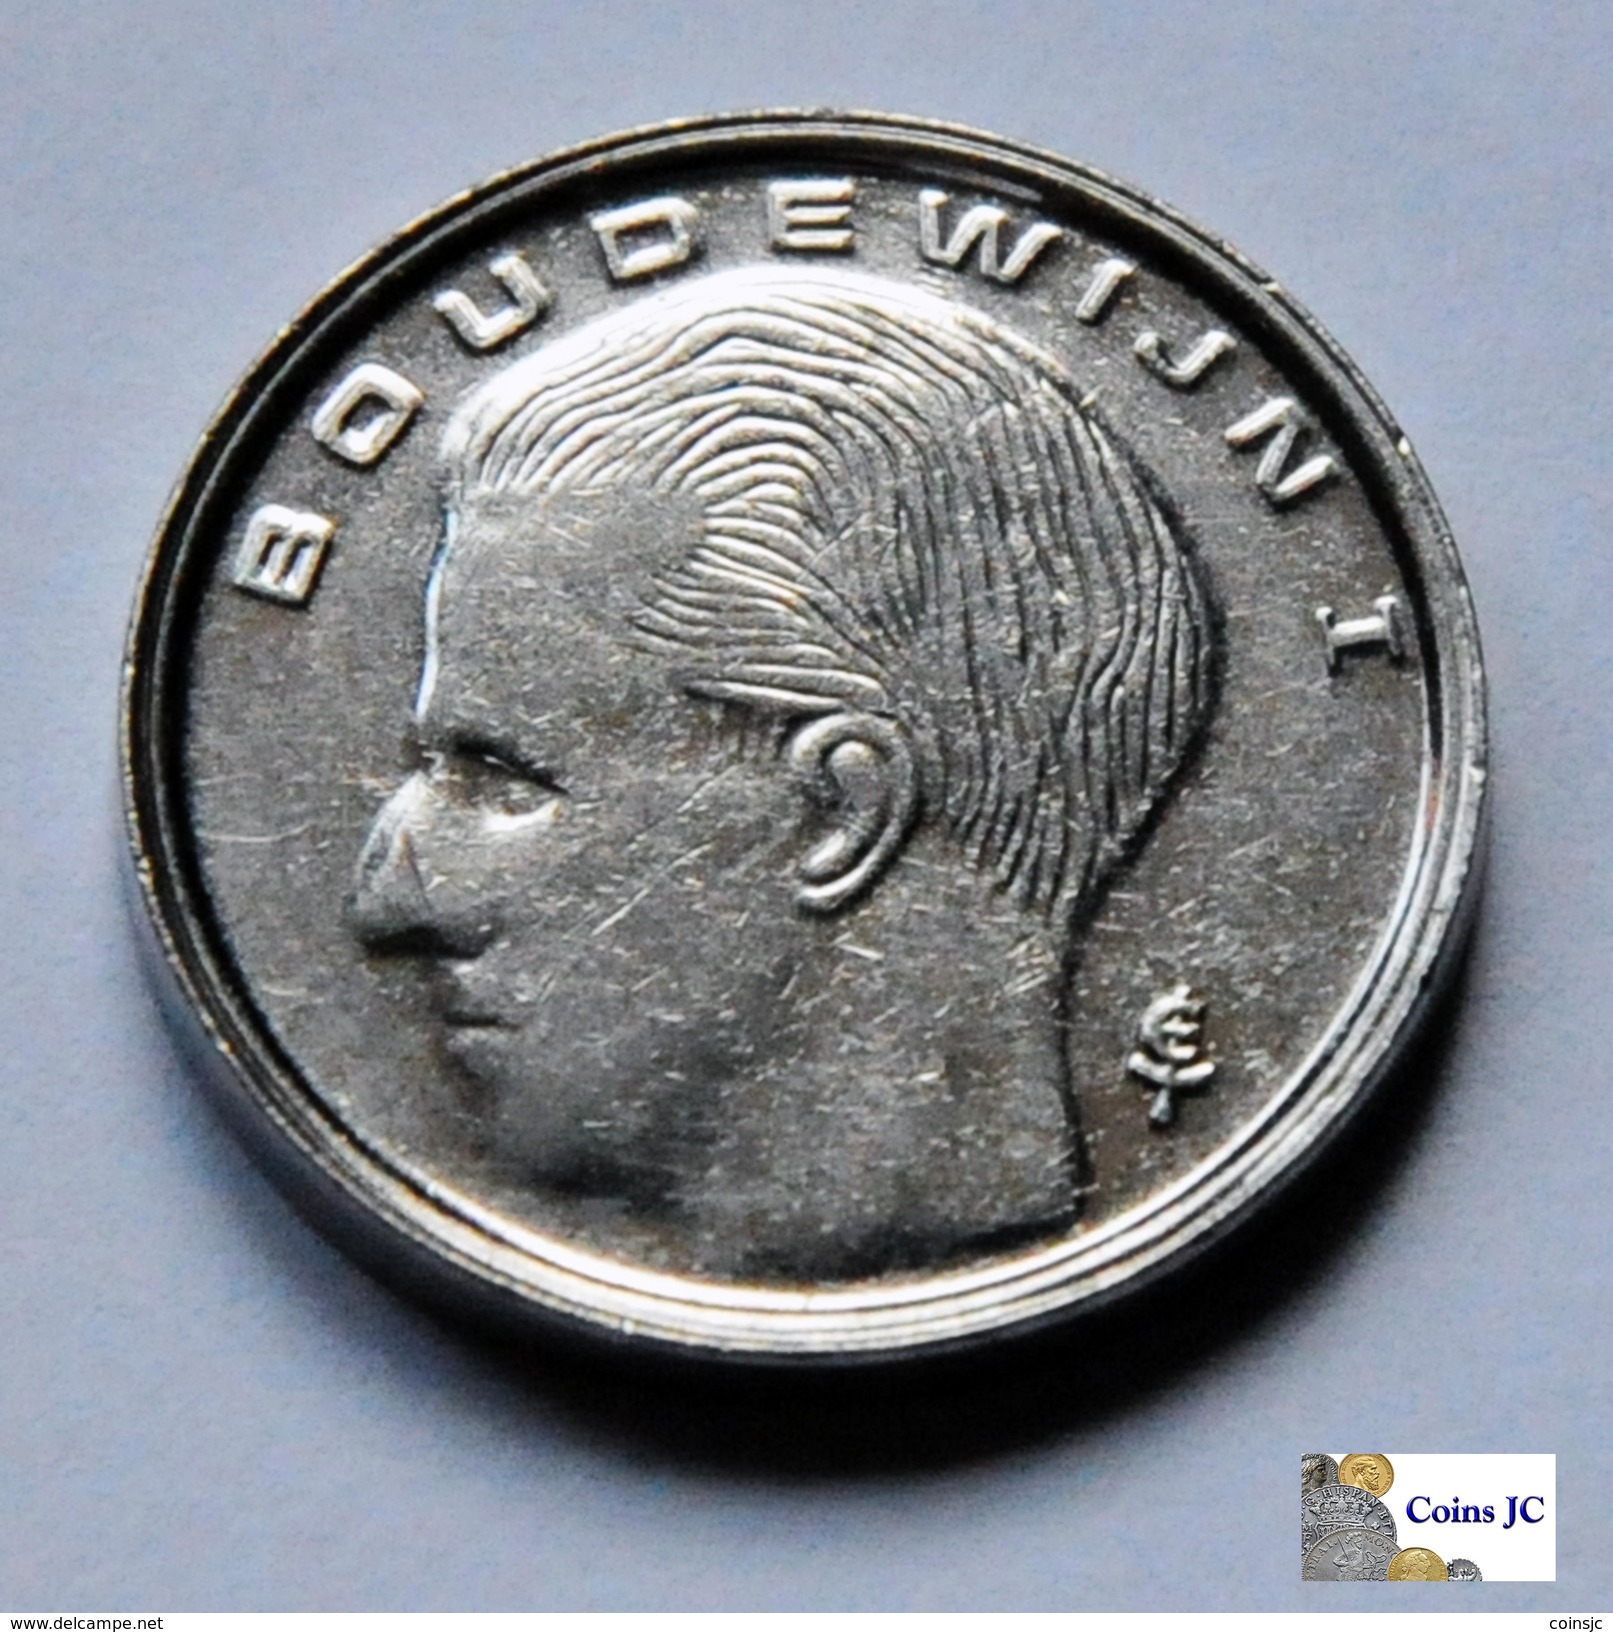 Bélgica - 1 Franc - 1989 - 1 Franc